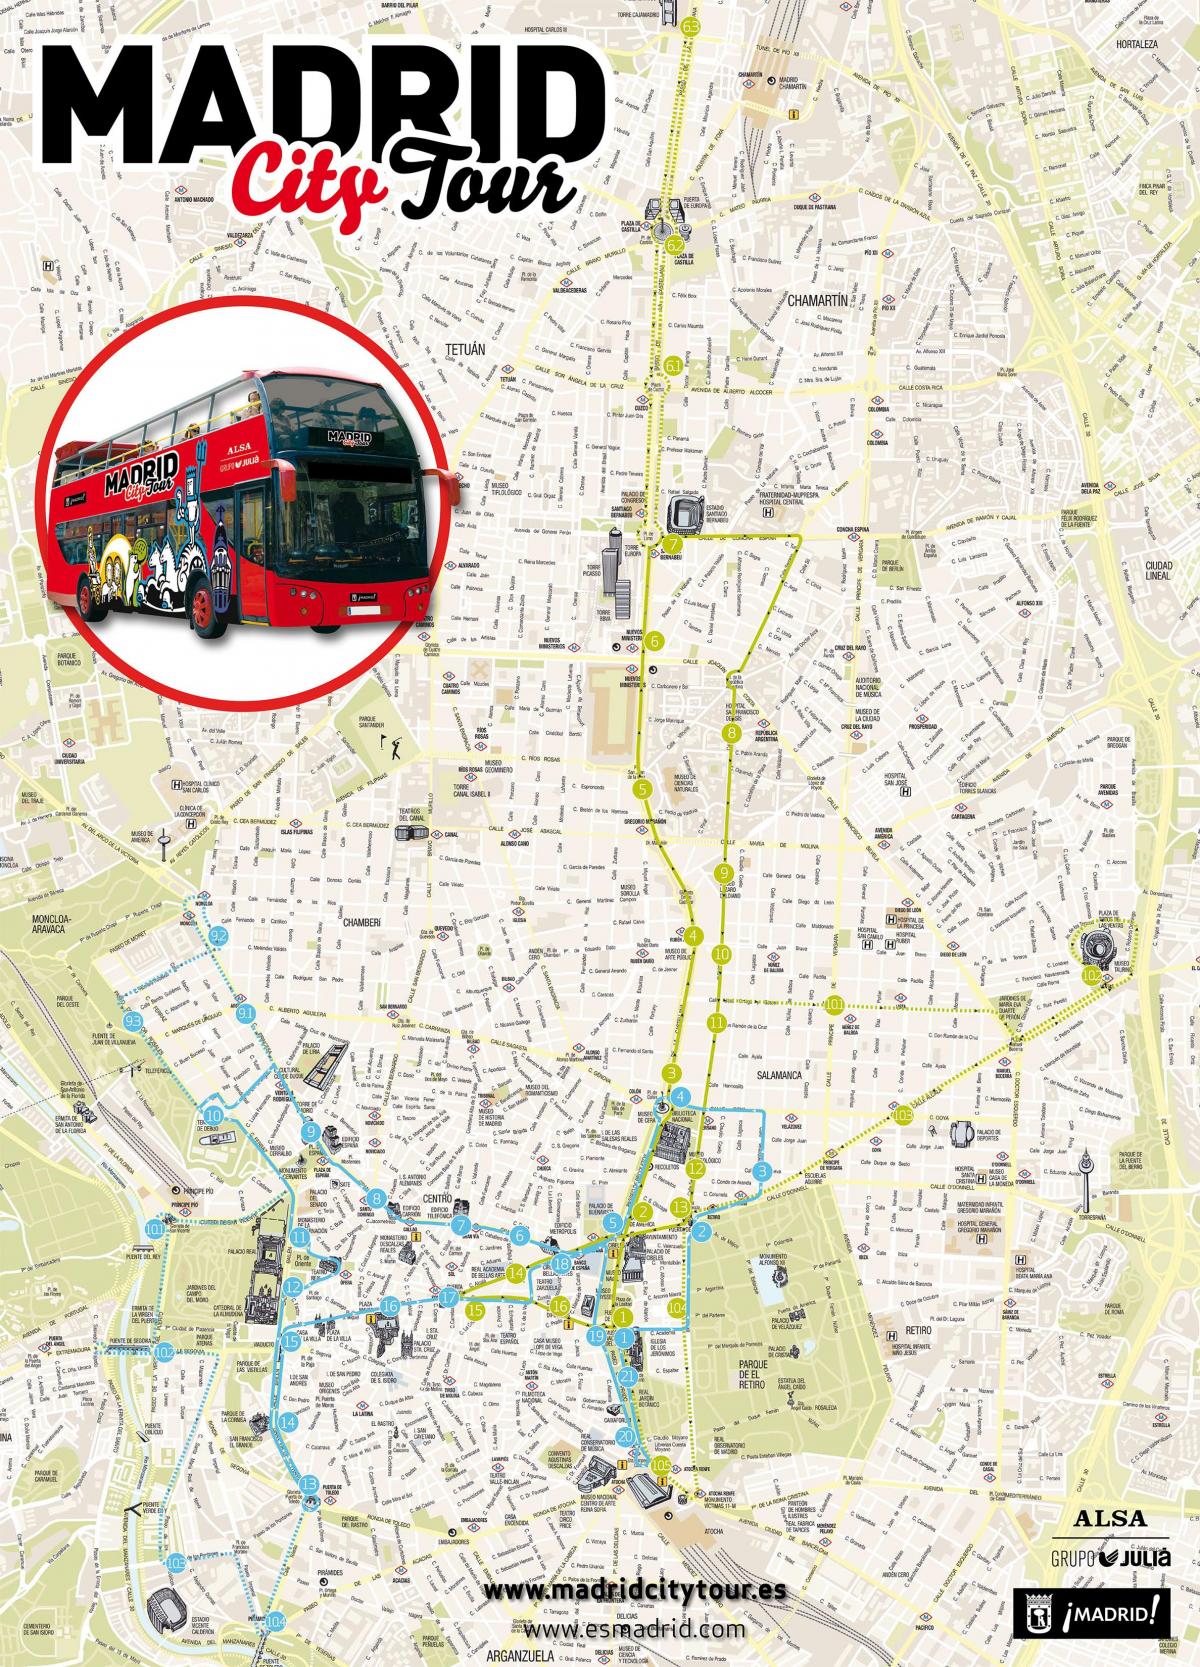 Madrid city bus tour mapu